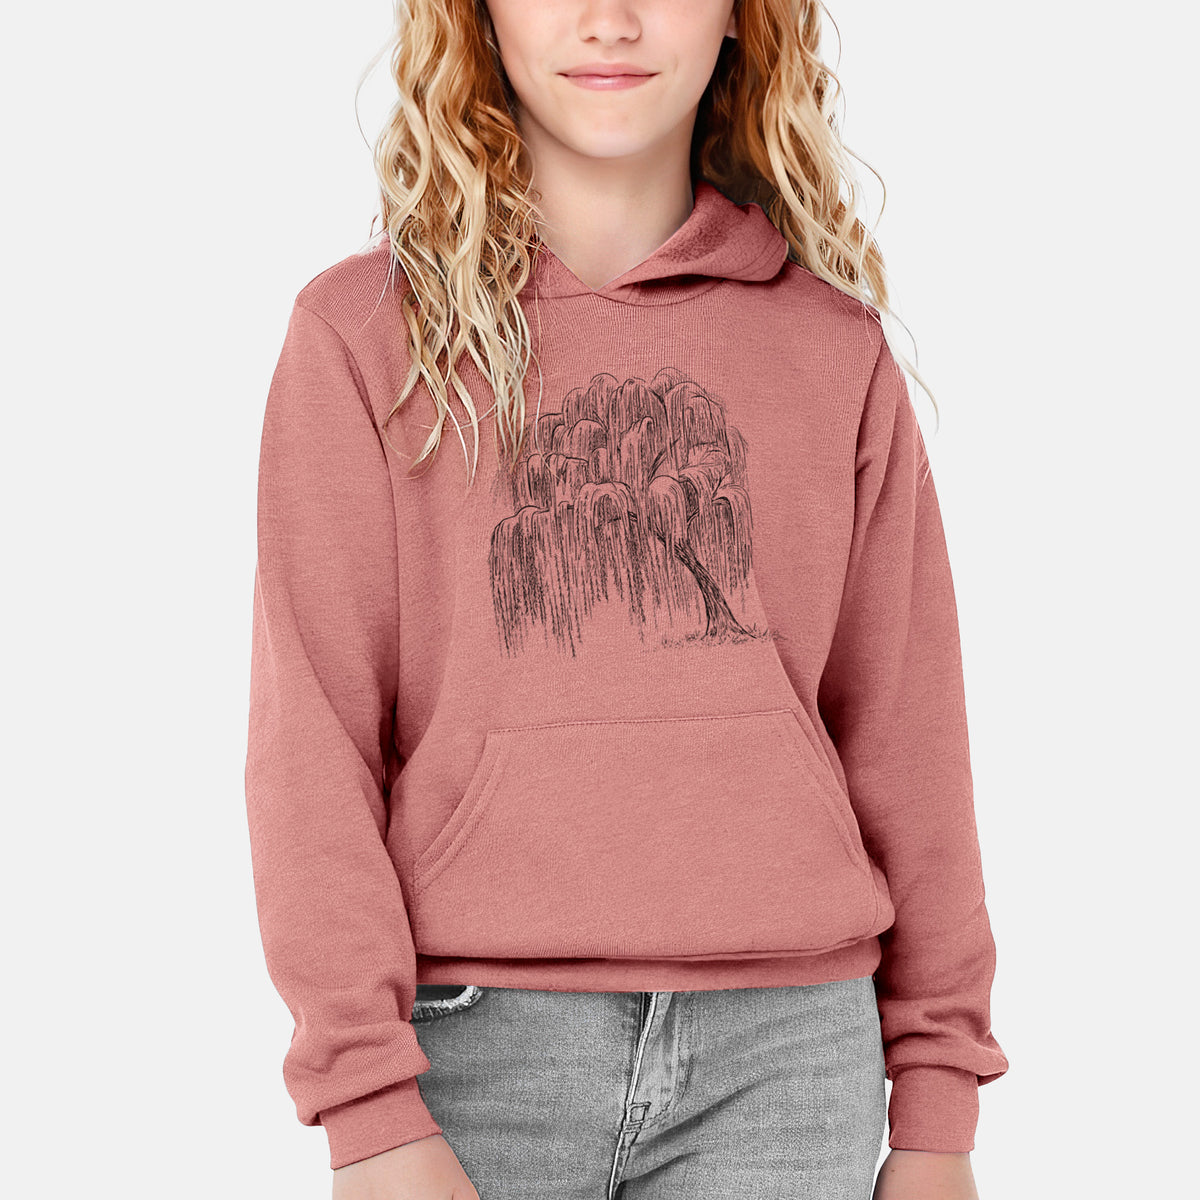 Weeping Willow - Salix babylonica - Youth Hoodie Sweatshirt